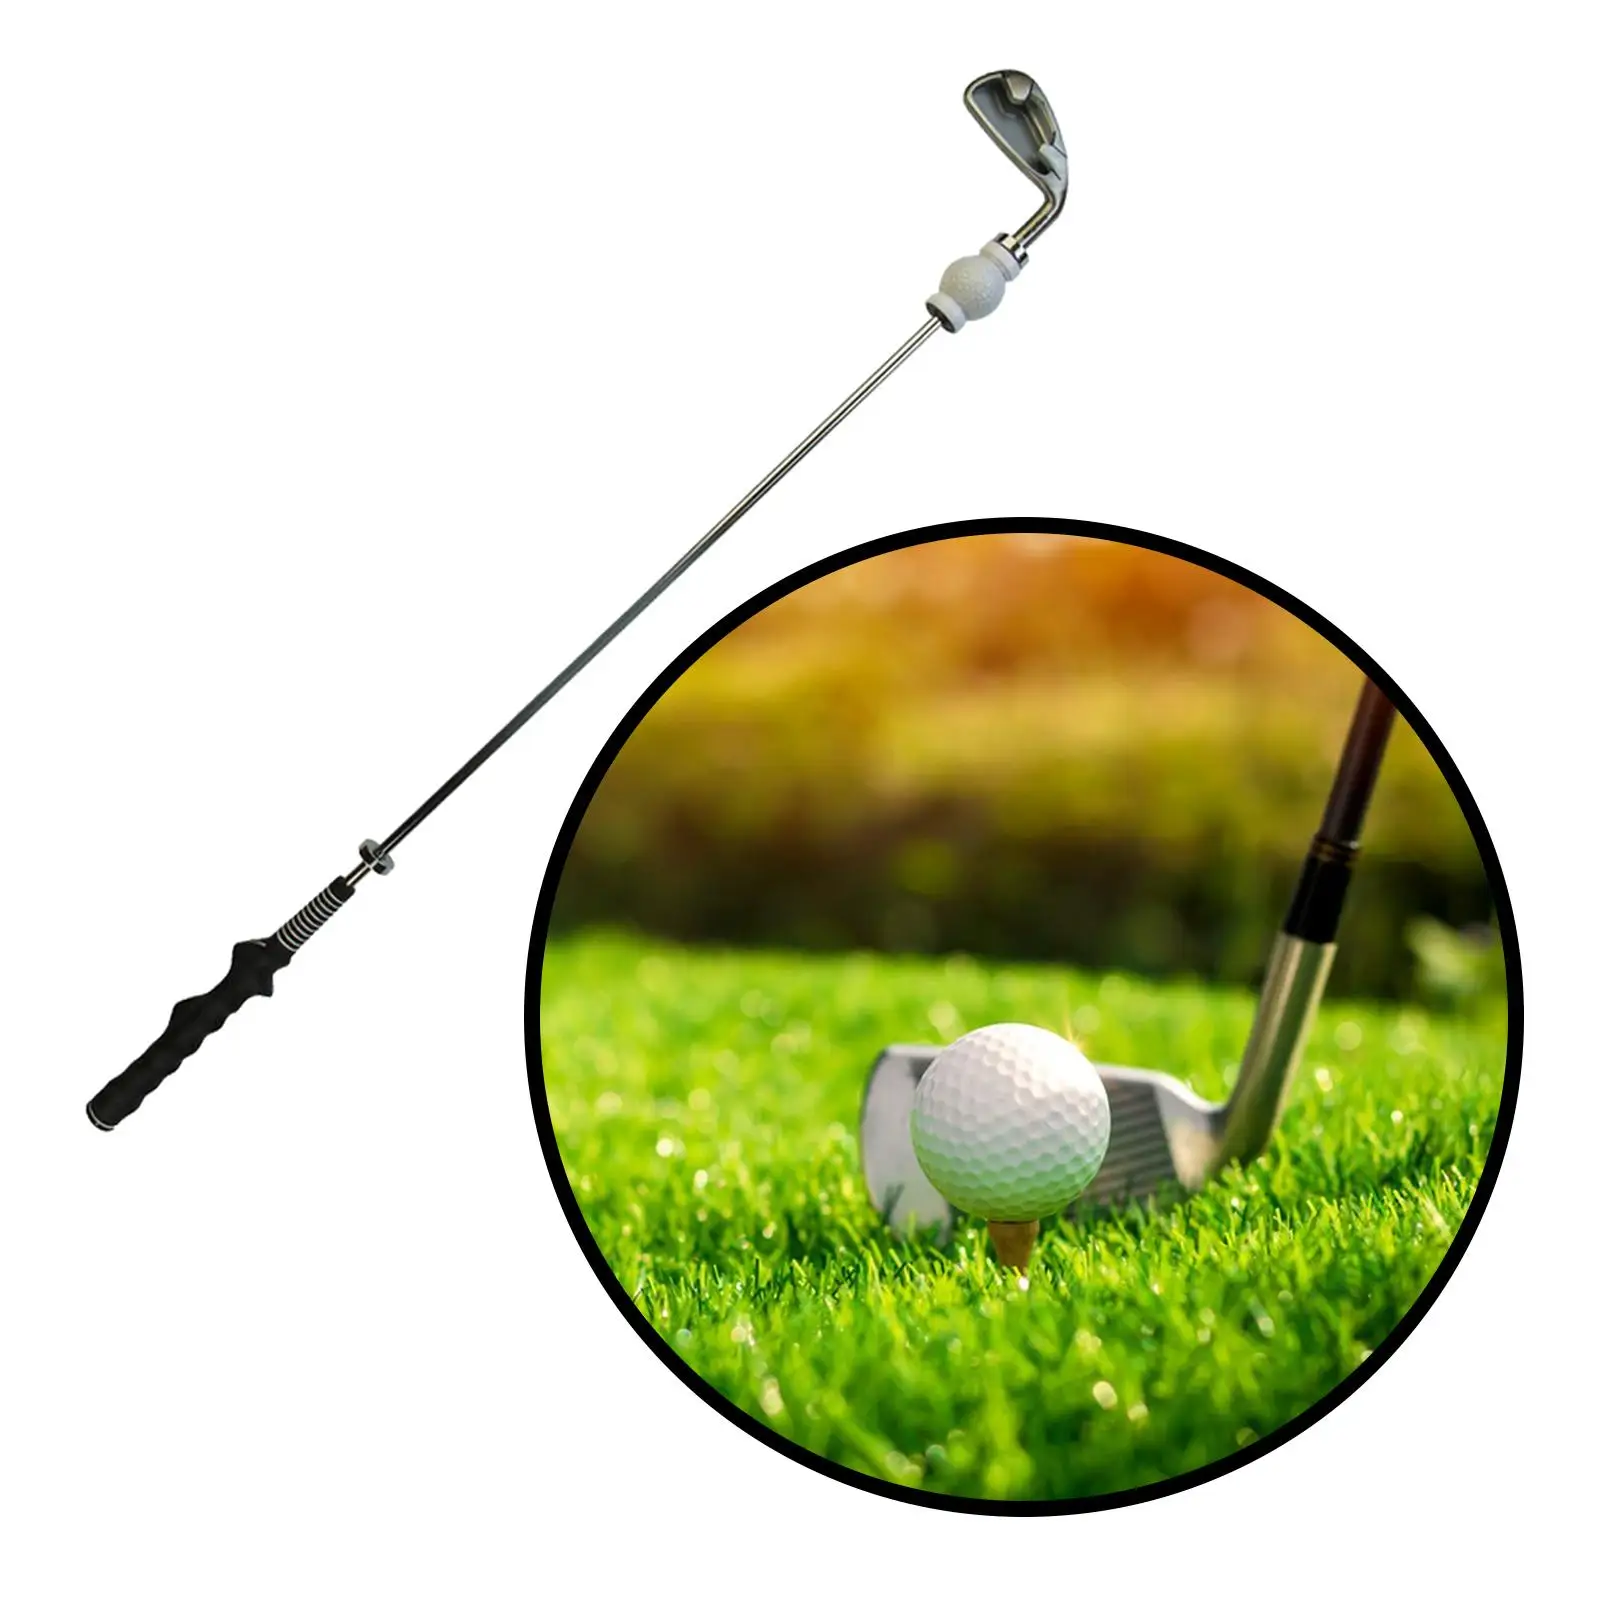 

Golf Magnetic Swing Trainer Outdoor Equipment Improve Swing Skills Training Stick for Rhythm Balance Tempo Strength Flexibility